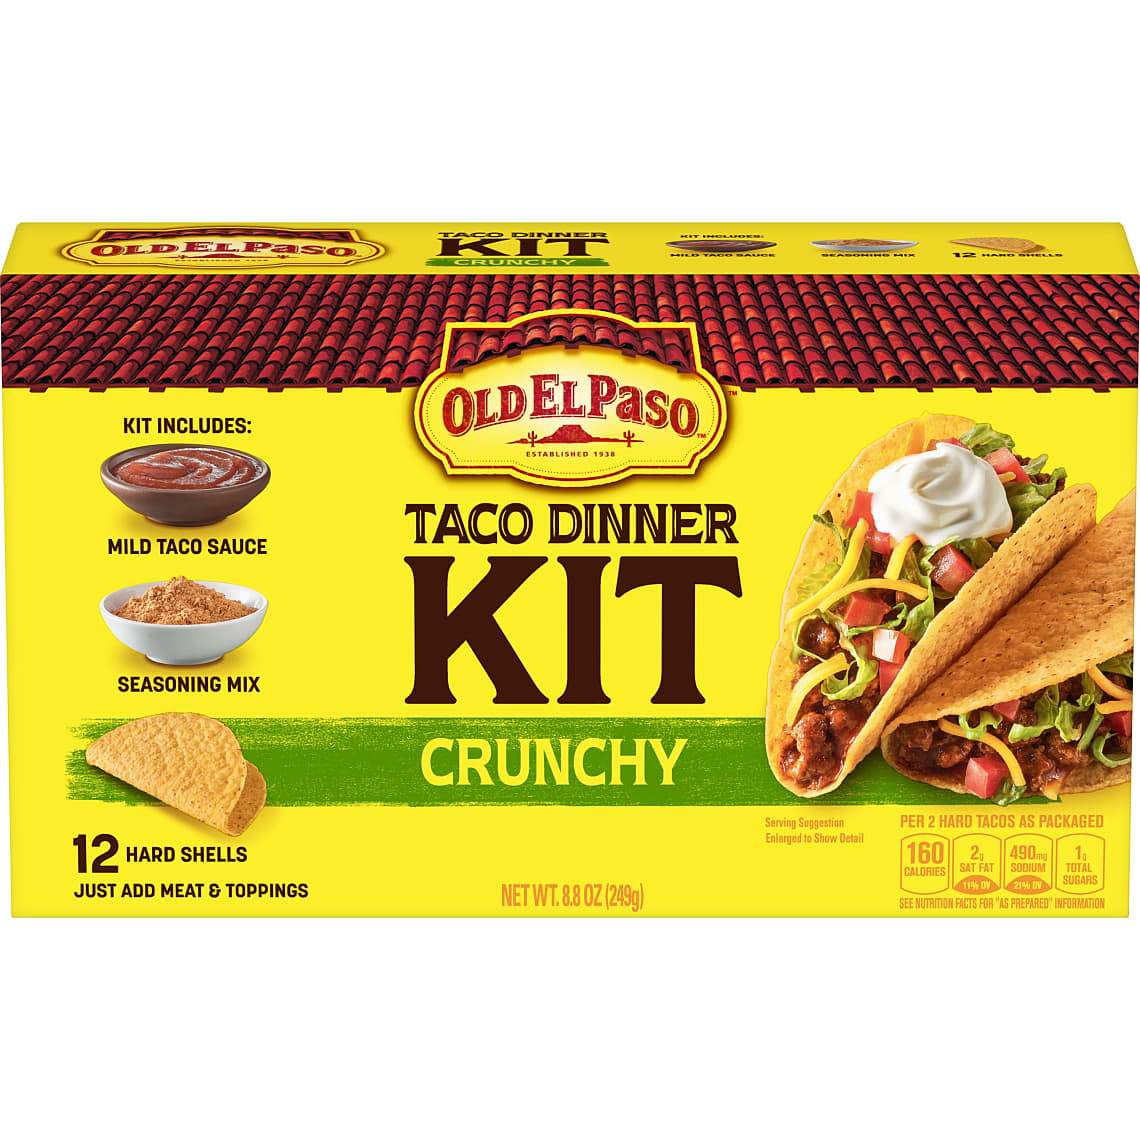 Old El Paso Taco Dinner Kit Crunchy 8 oz Box